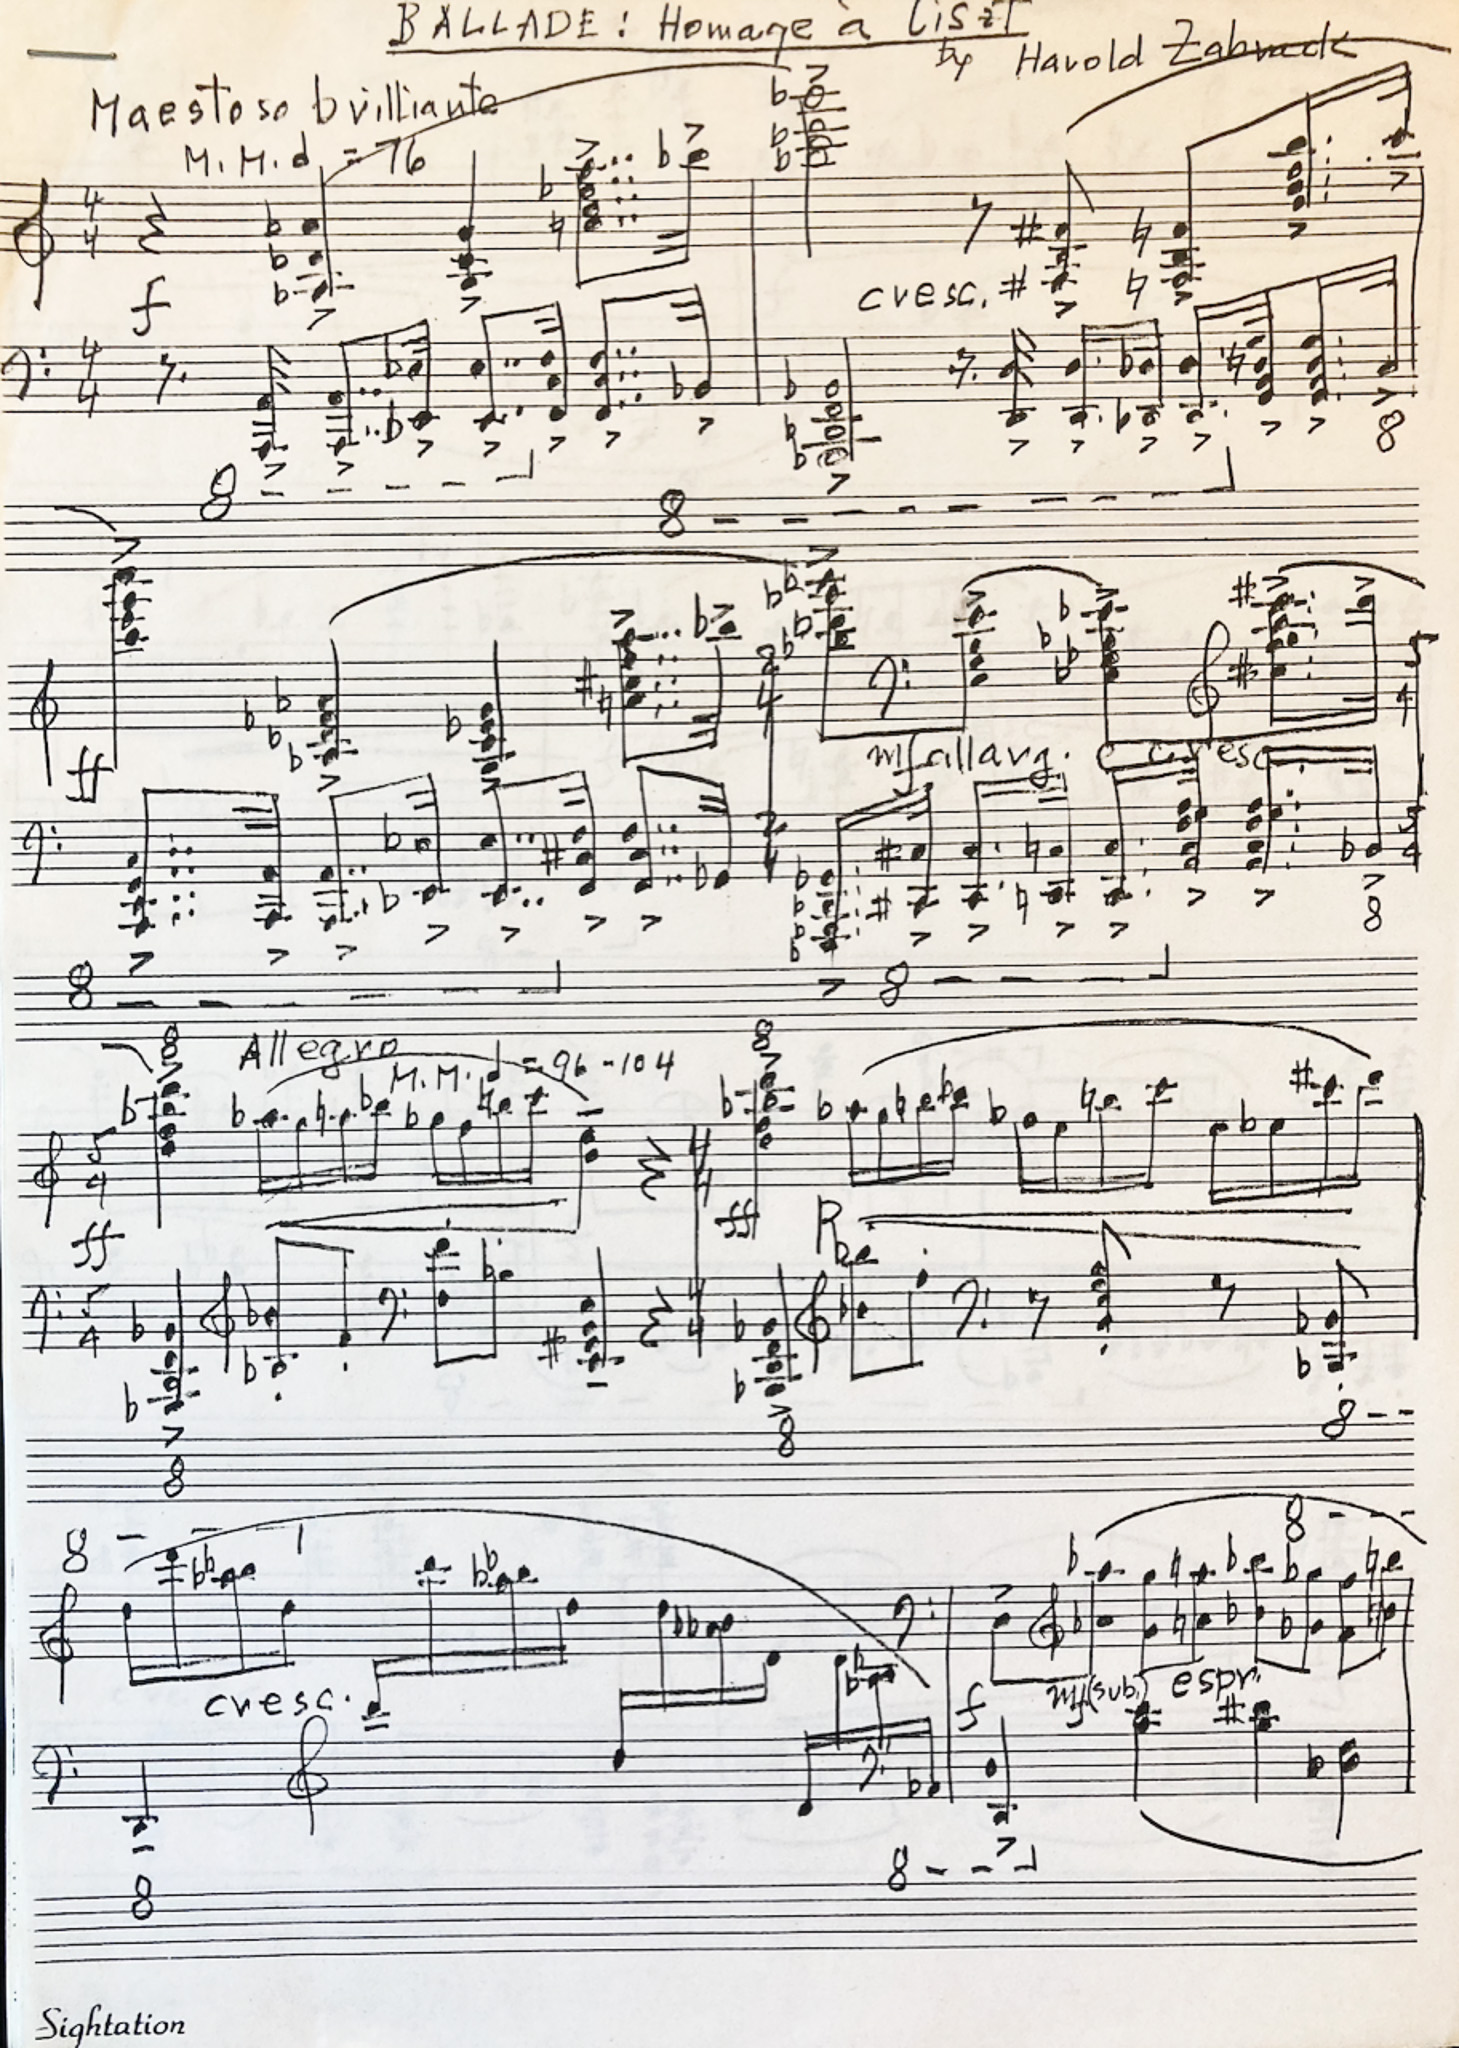 A page of handwritten music manuscript: Hommage à Prokefiev by Harold Zabrack.